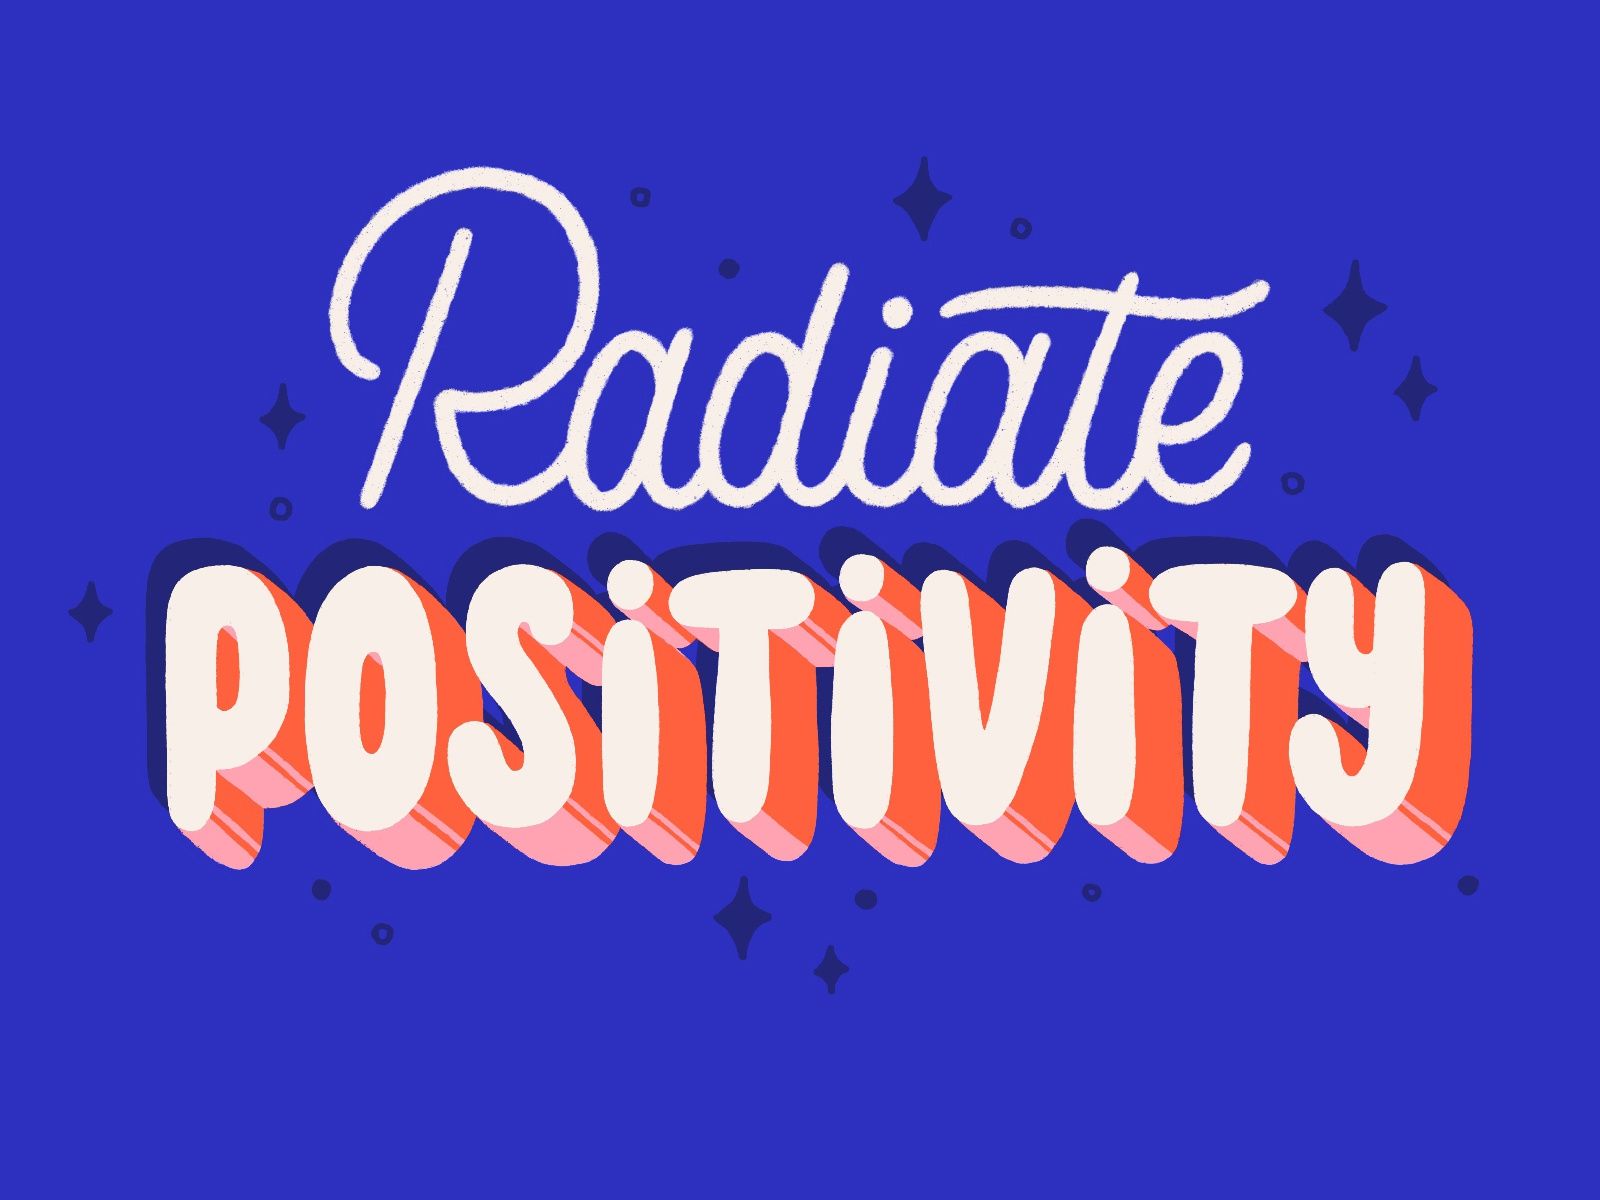 radiate positivity